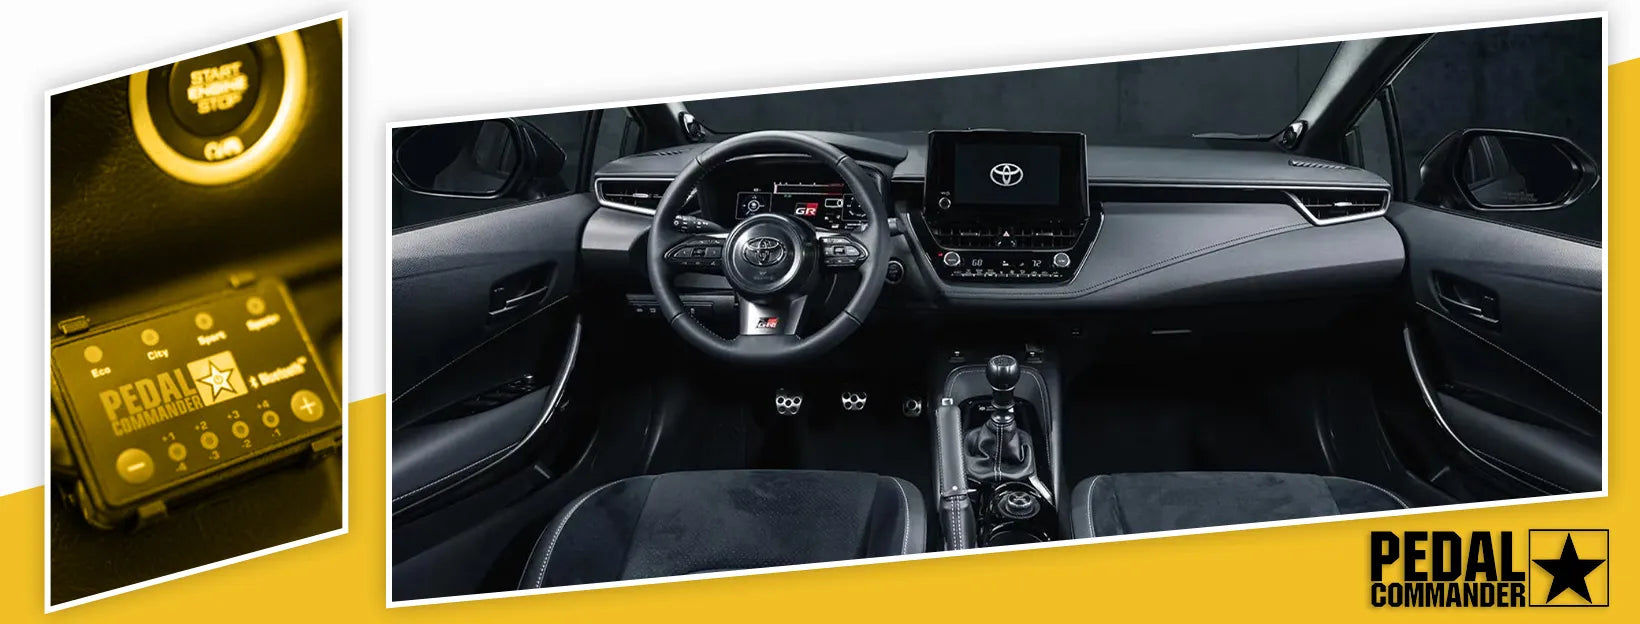 Pedal Commander for Toyota GR Corolla - interior